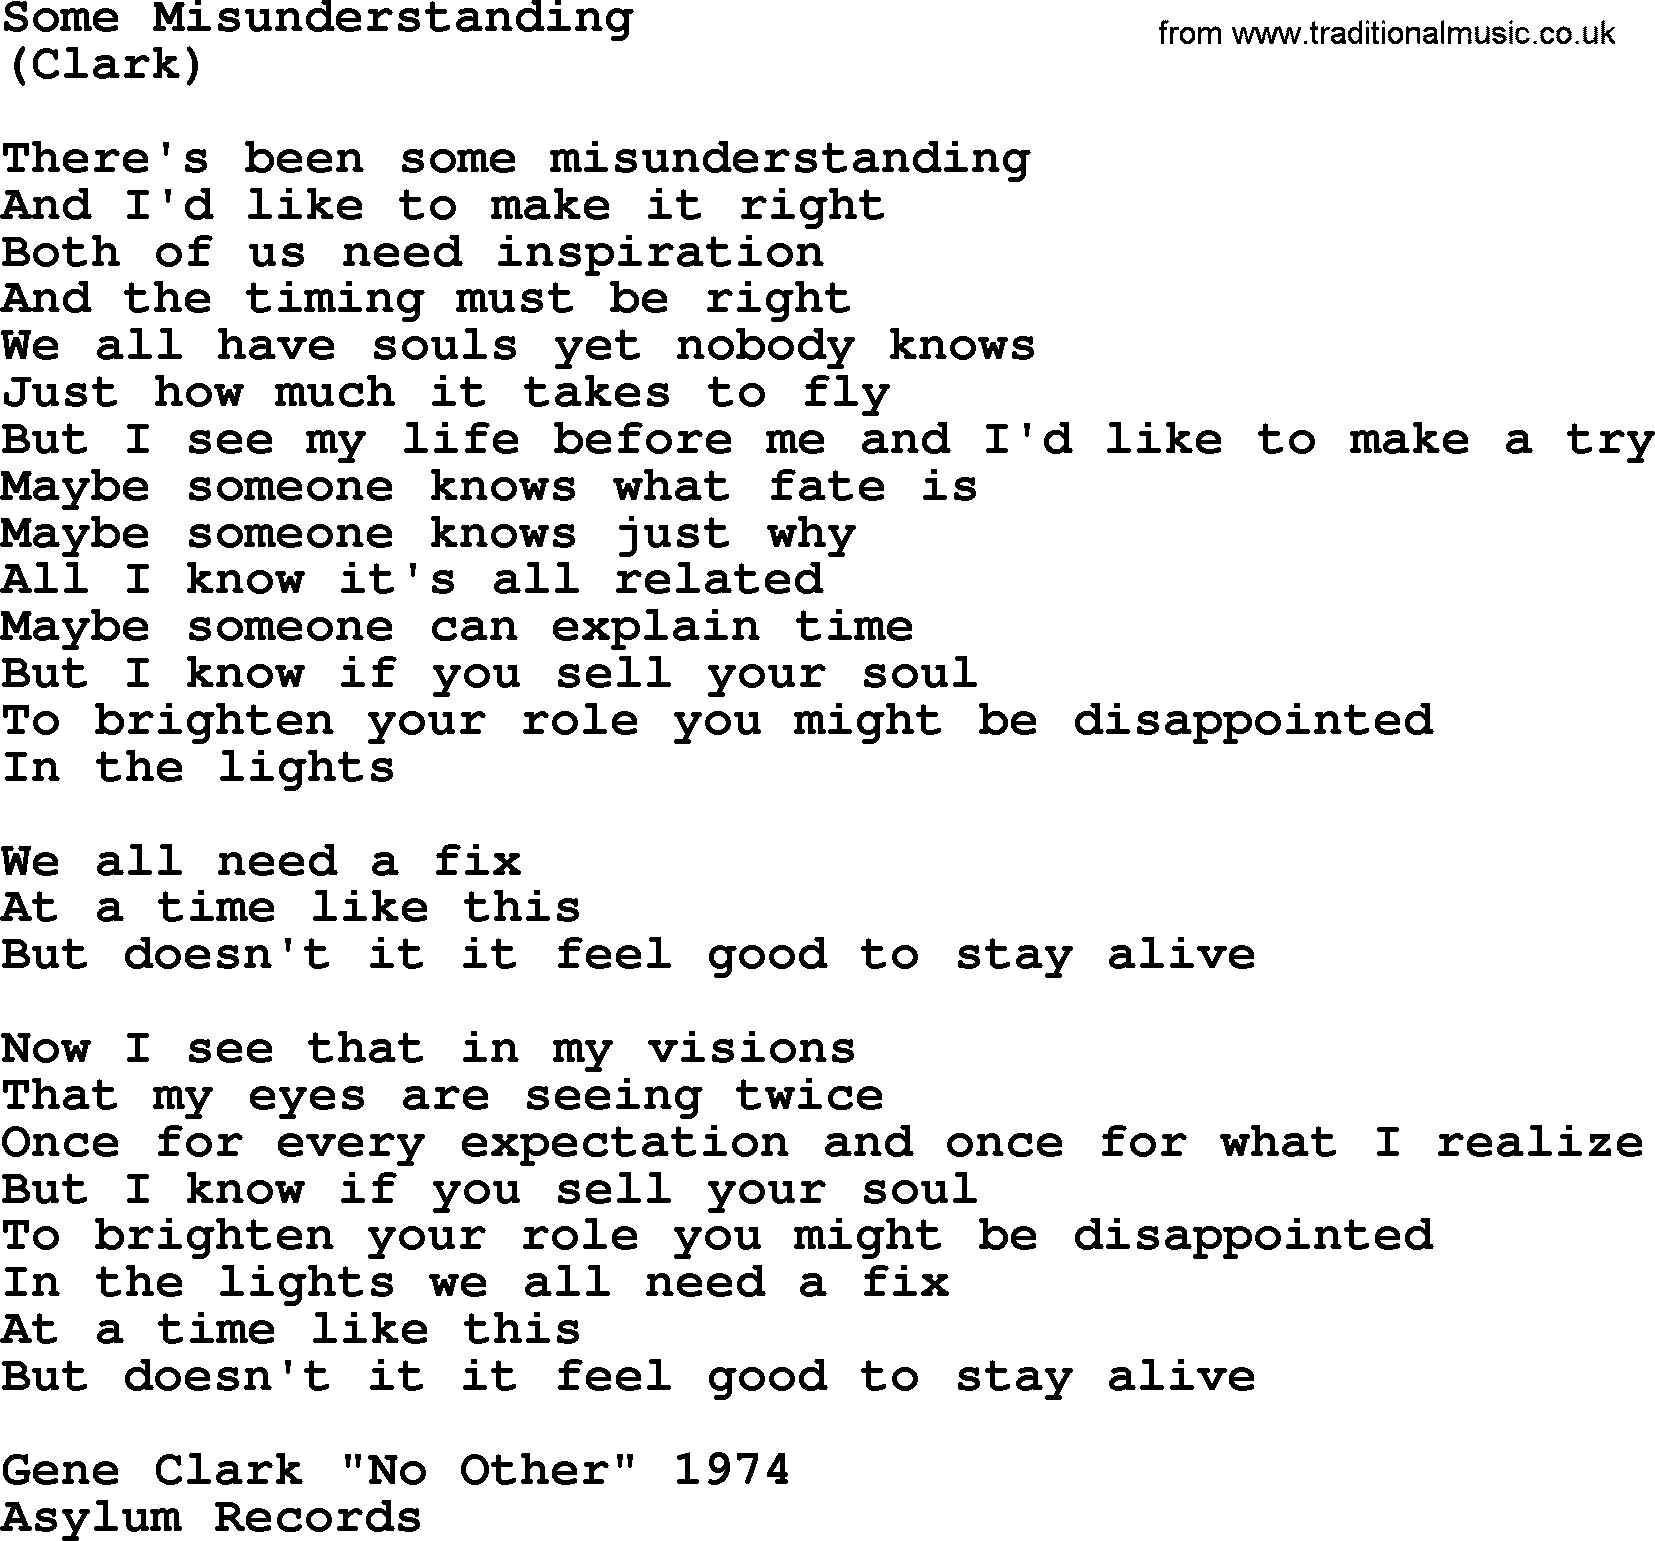 The Byrds song Some Misunderstanding, lyrics